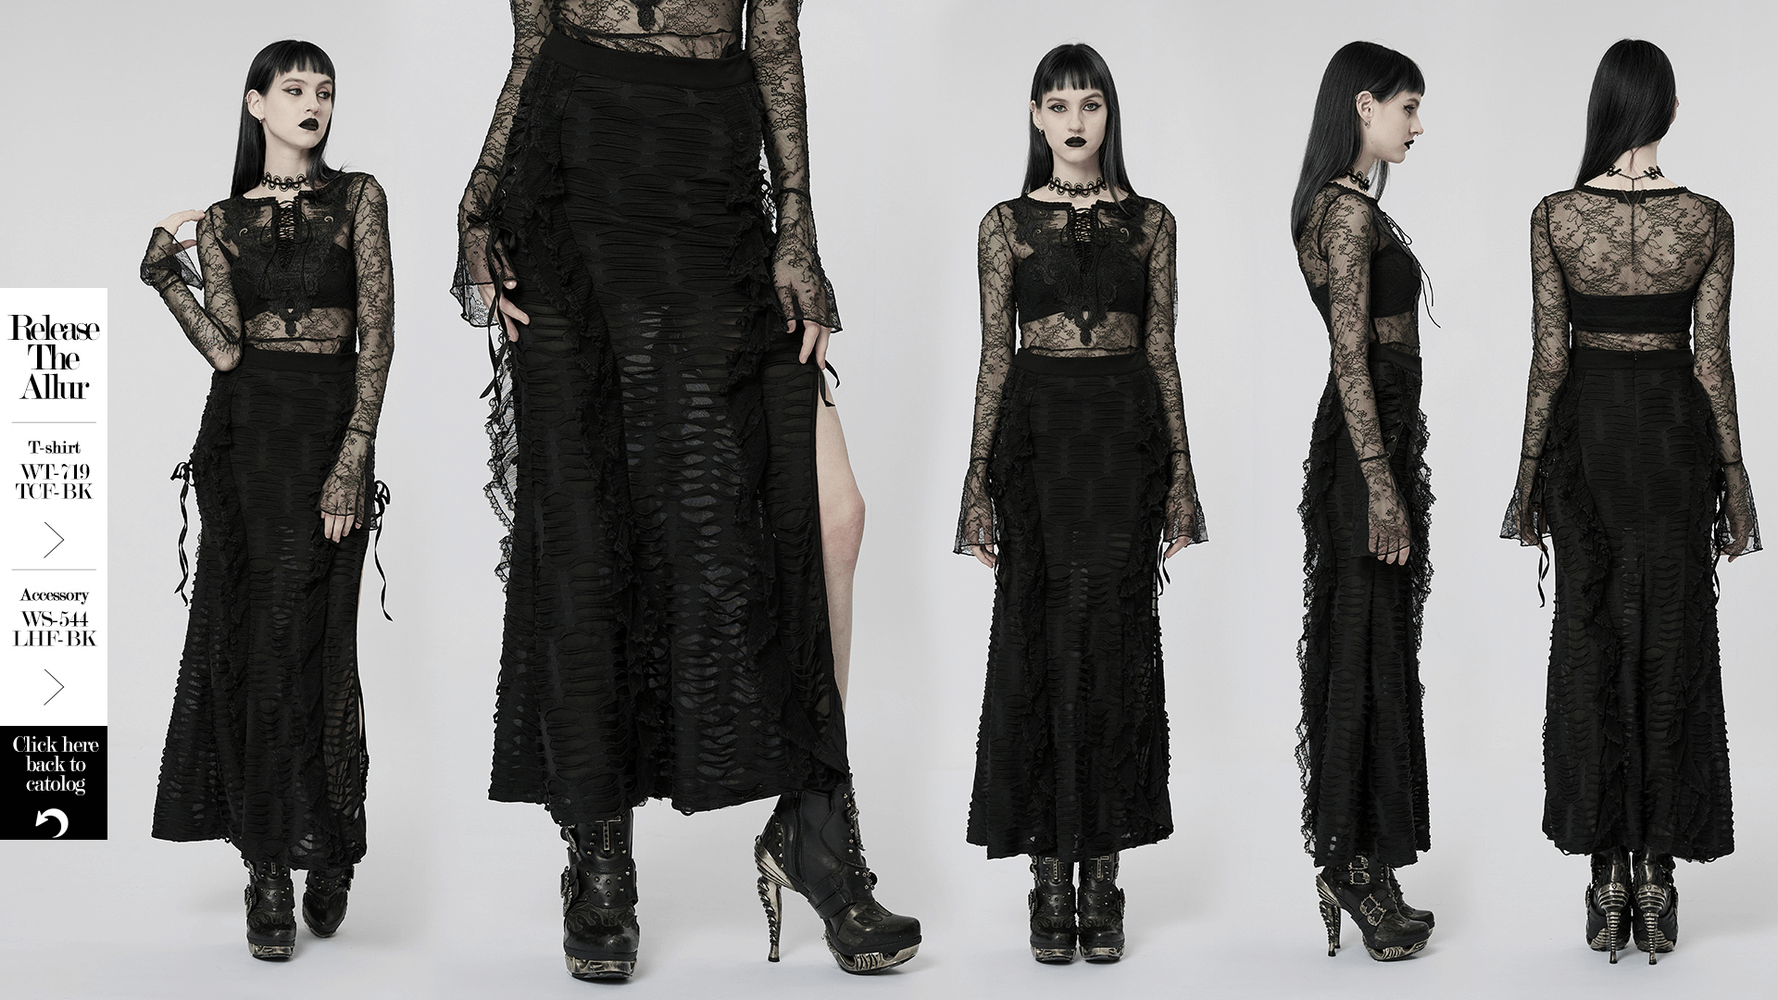 Stylish Layered Gothic Ruffle Skirt with High Slit